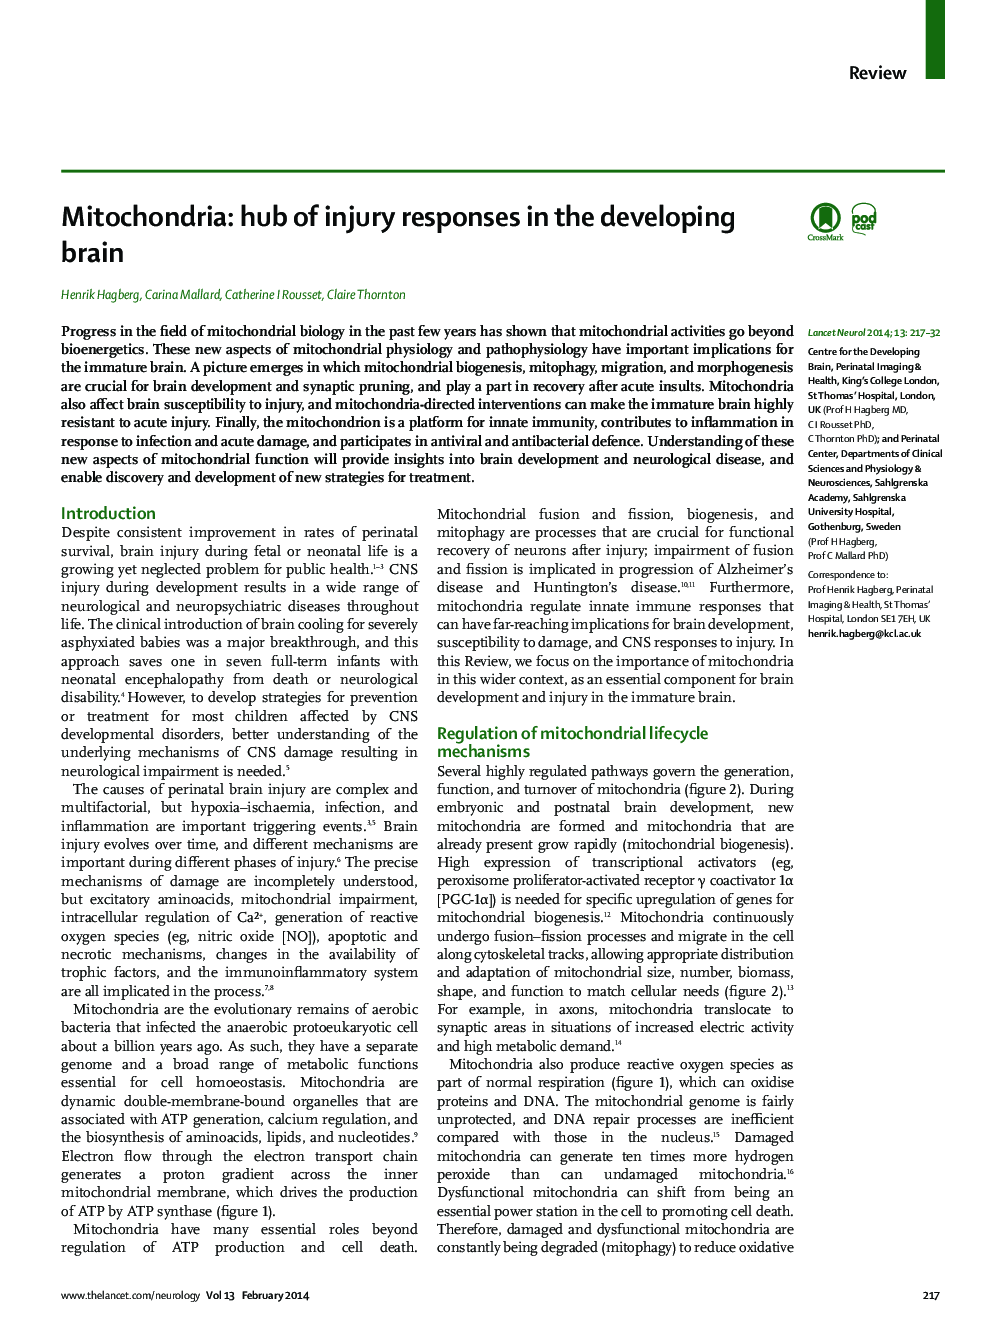 Mitochondria: hub of injury responses in the developing brain